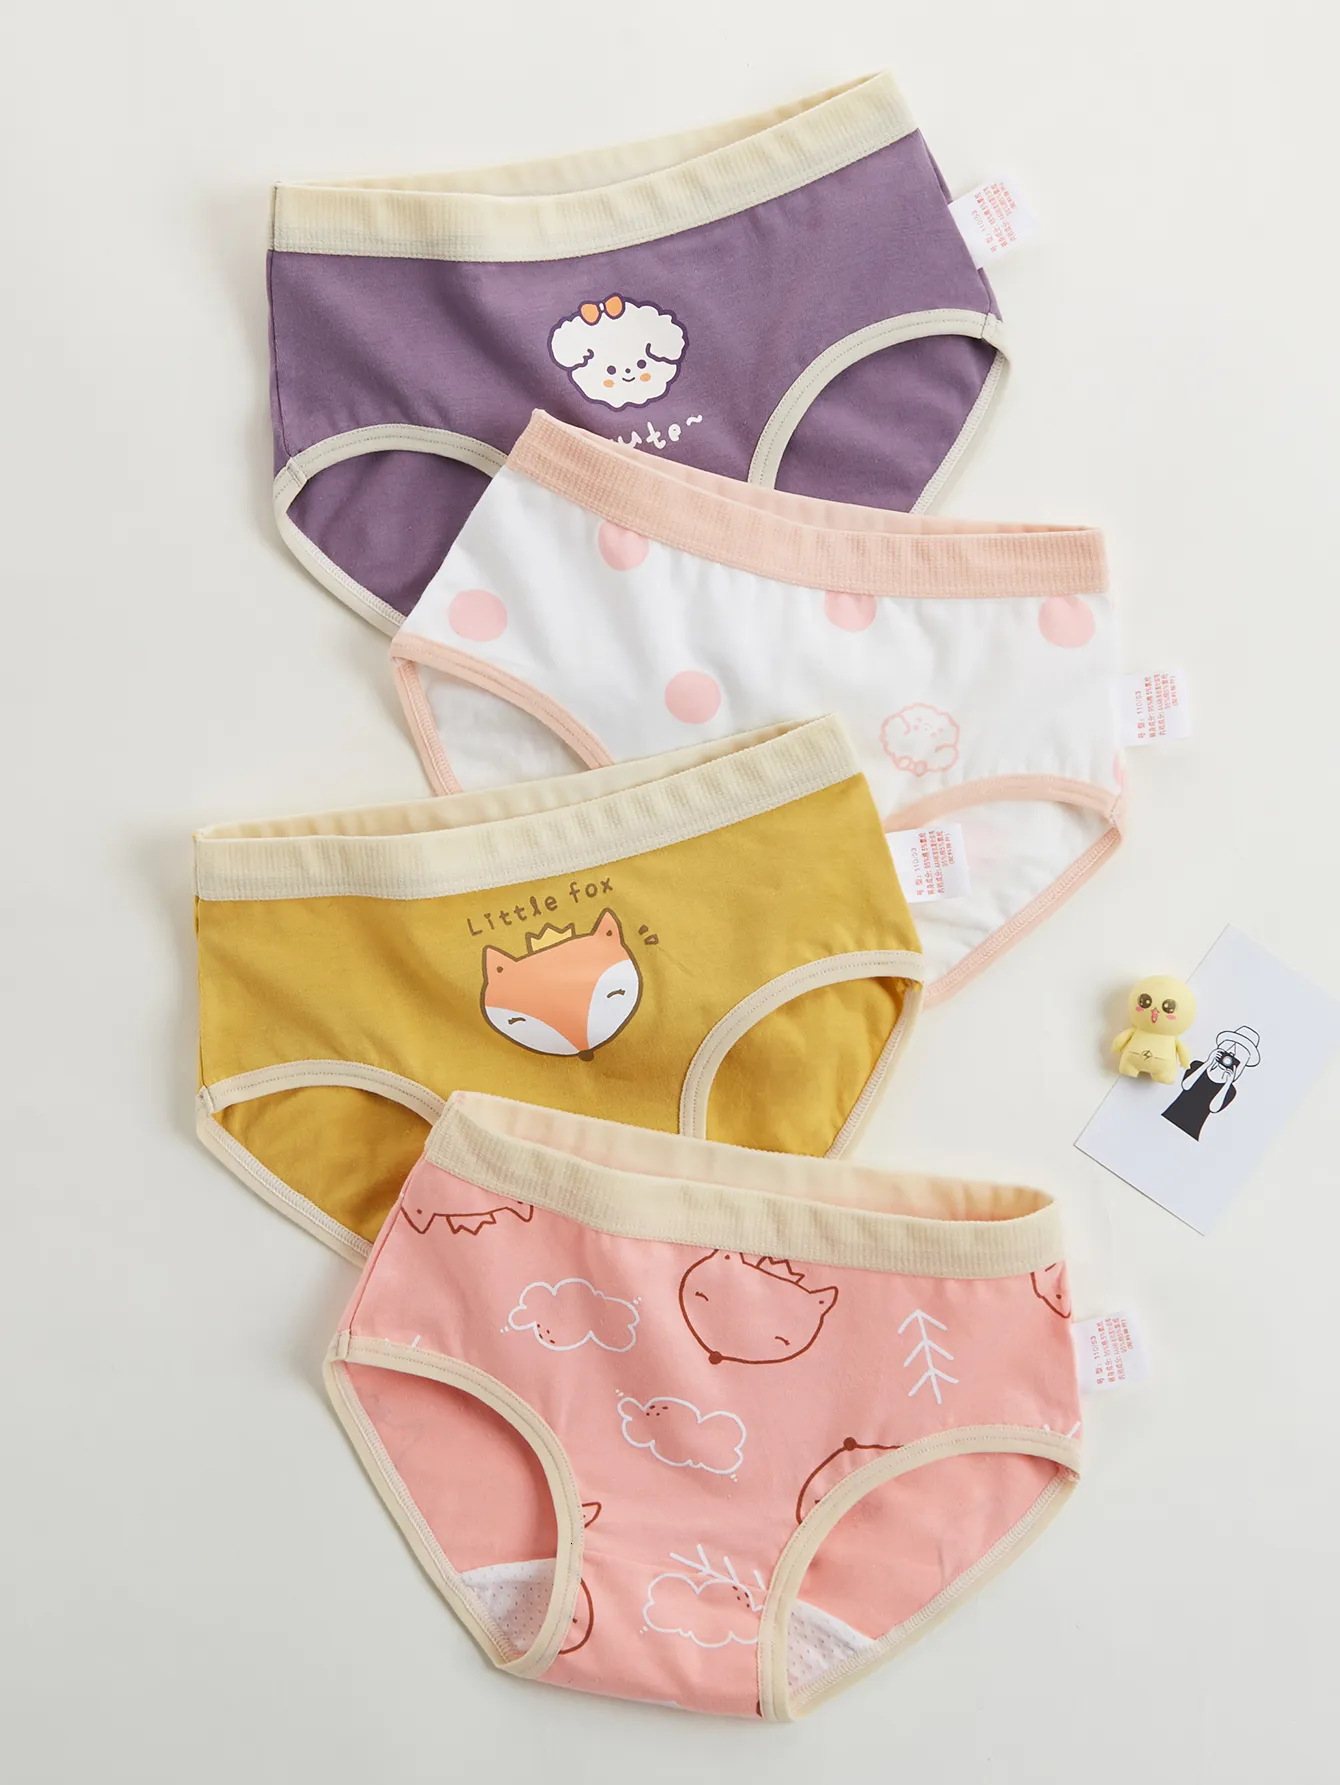 Cute Cartoon Polka Dot Cotton Toddler Underwear For Girls Sizes 6